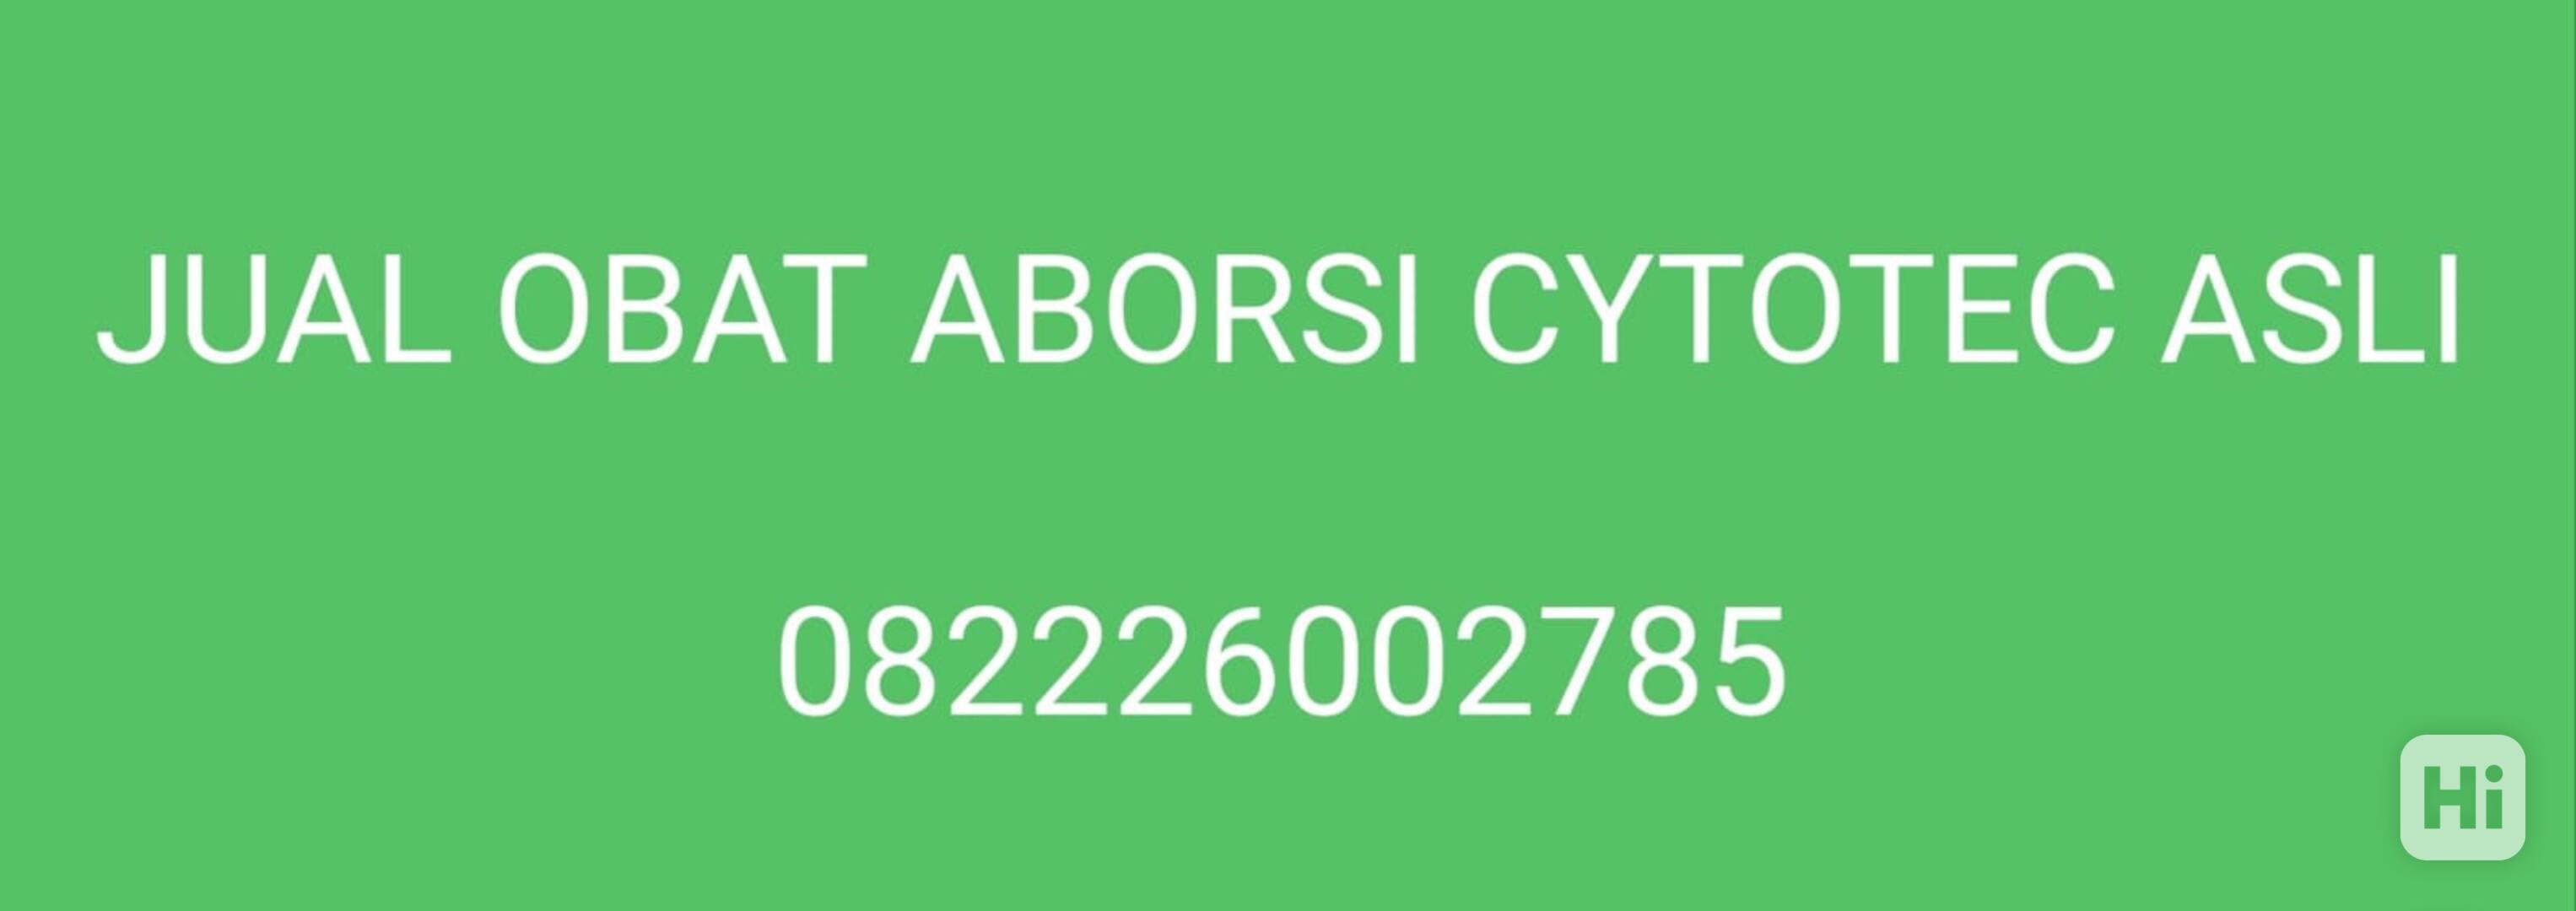 Toko Obat Aborsi Cod Malang 082226002785 Cytotec Asli Malang - foto 1